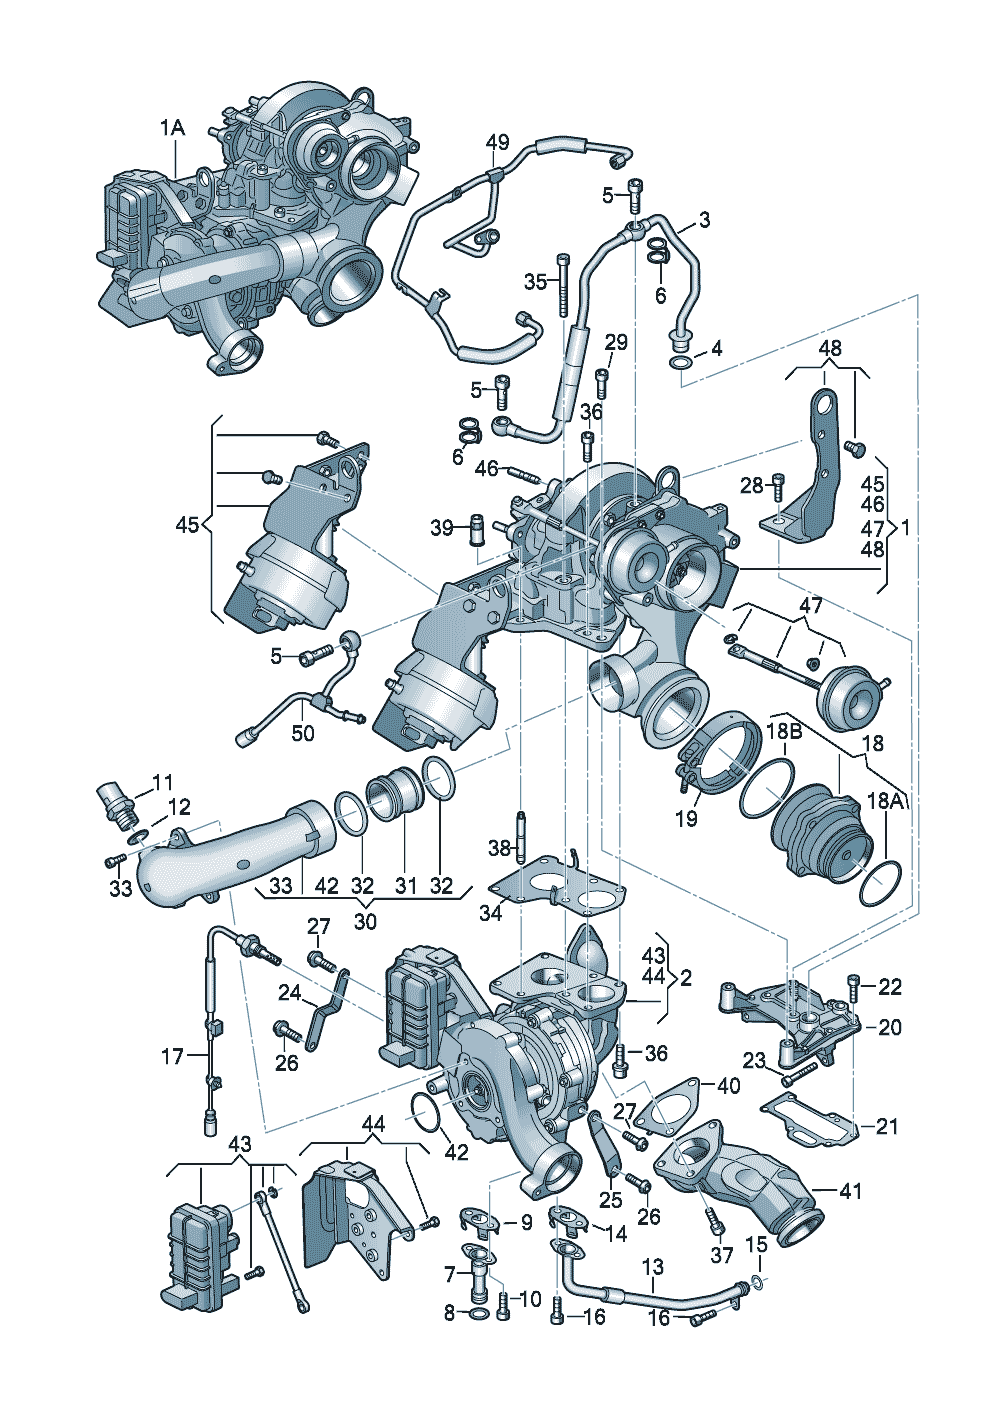 Exhaust gas turbocharger 3.0Ltr. - Audi A6/Avant - a6